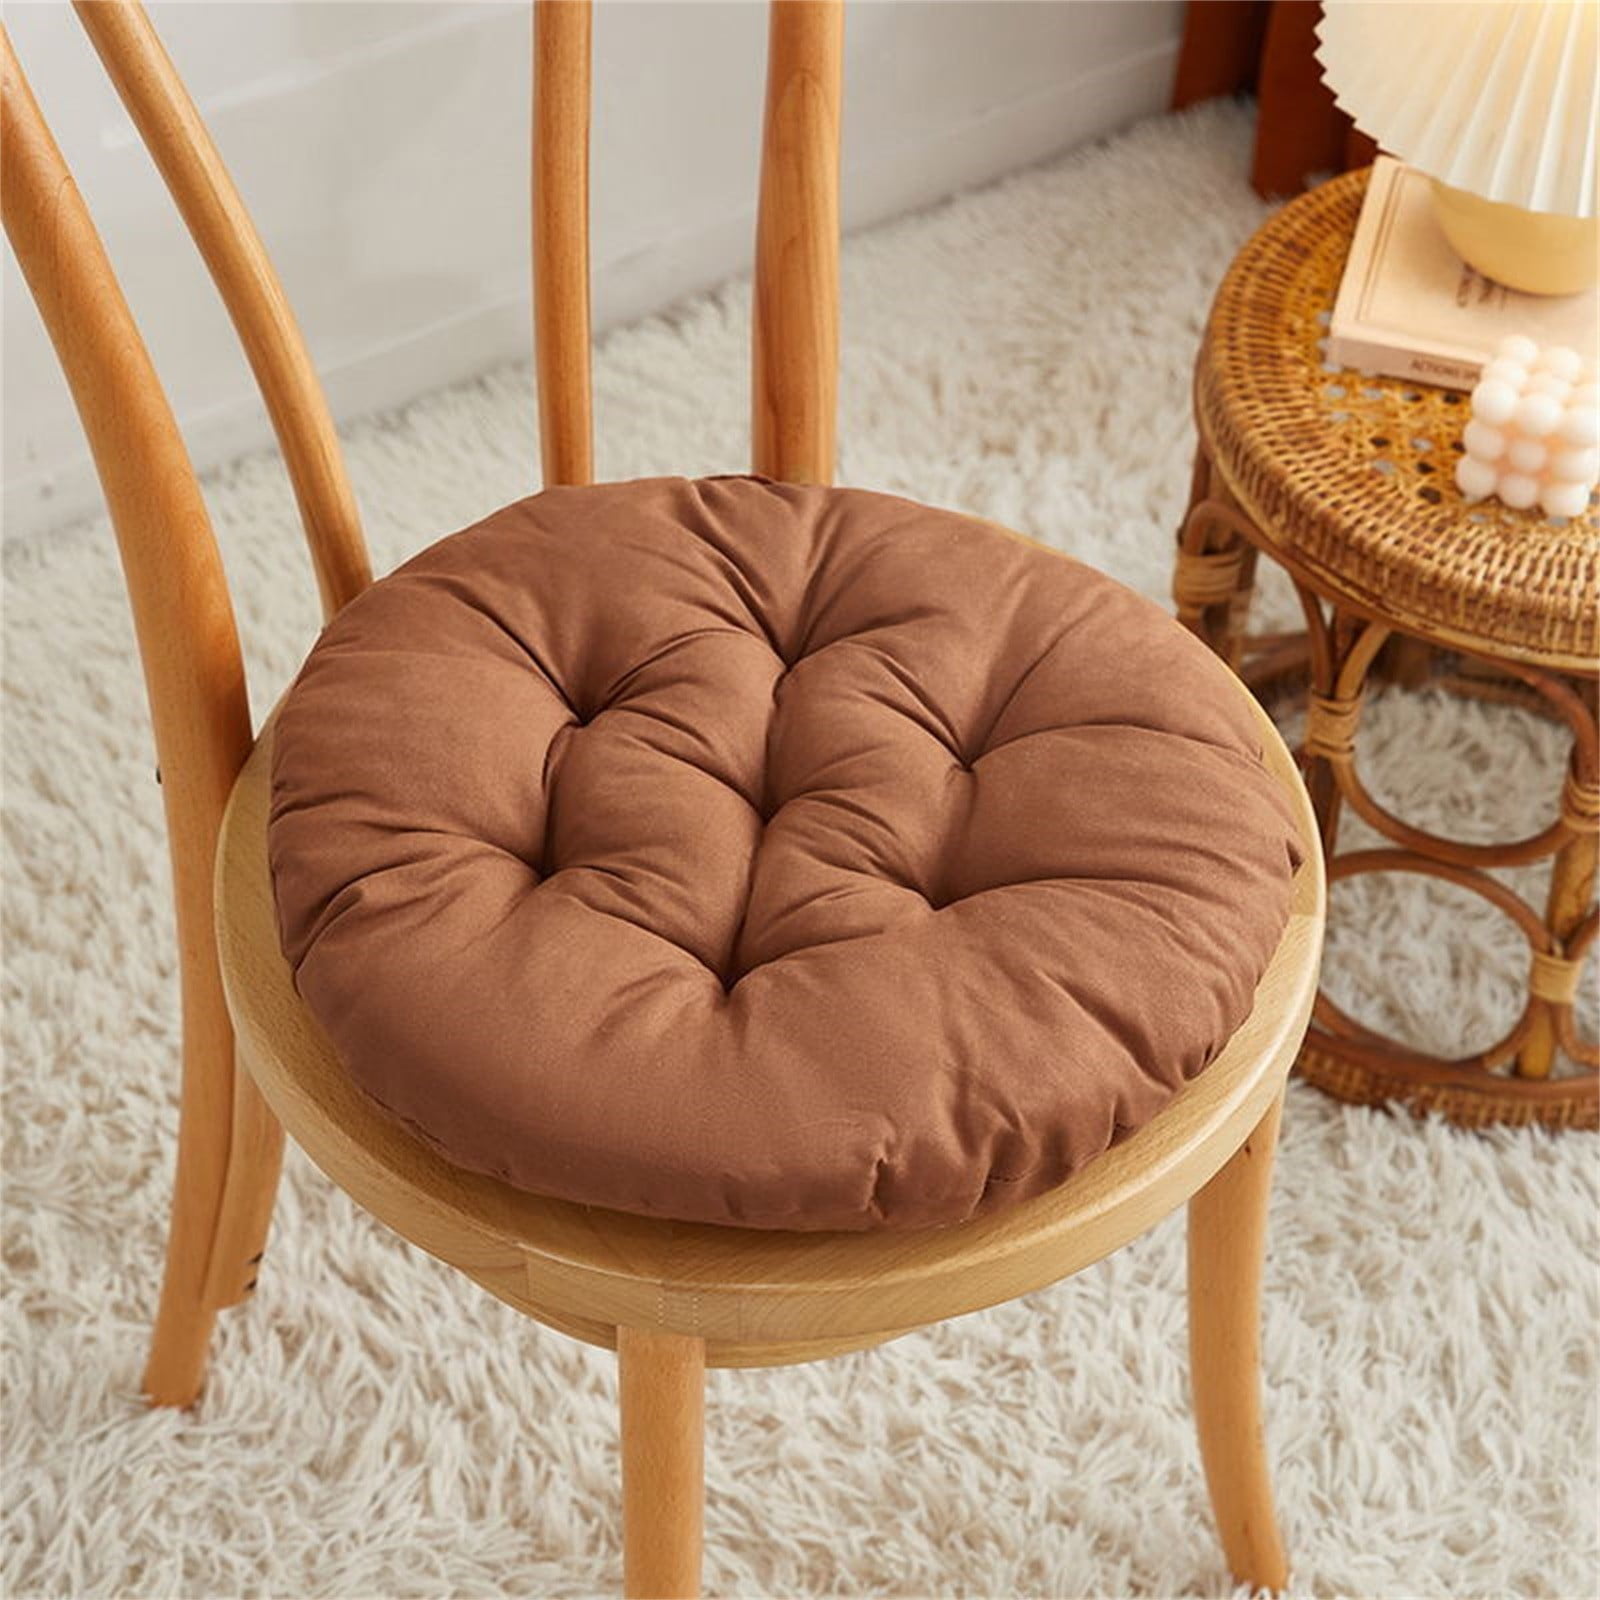 Yirtree Soft Thicken Microfiber Chair Pad Seat Cushion, Full